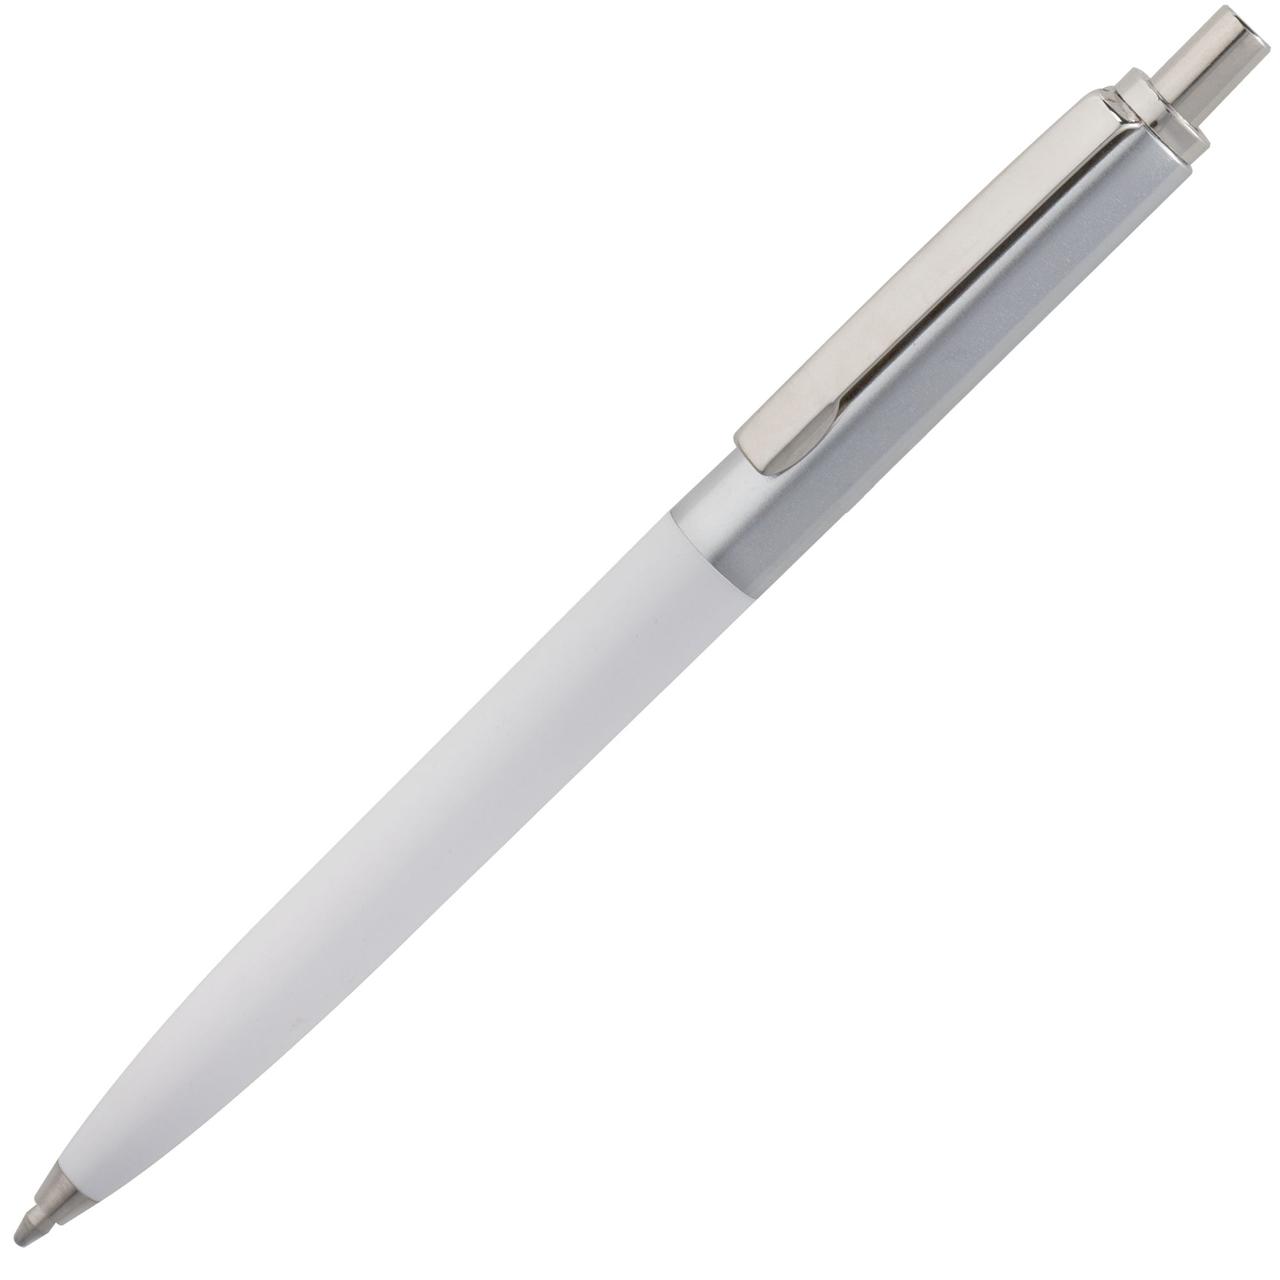 Ручка шариковая Popular, белая (артикул 5895.60), фото 1